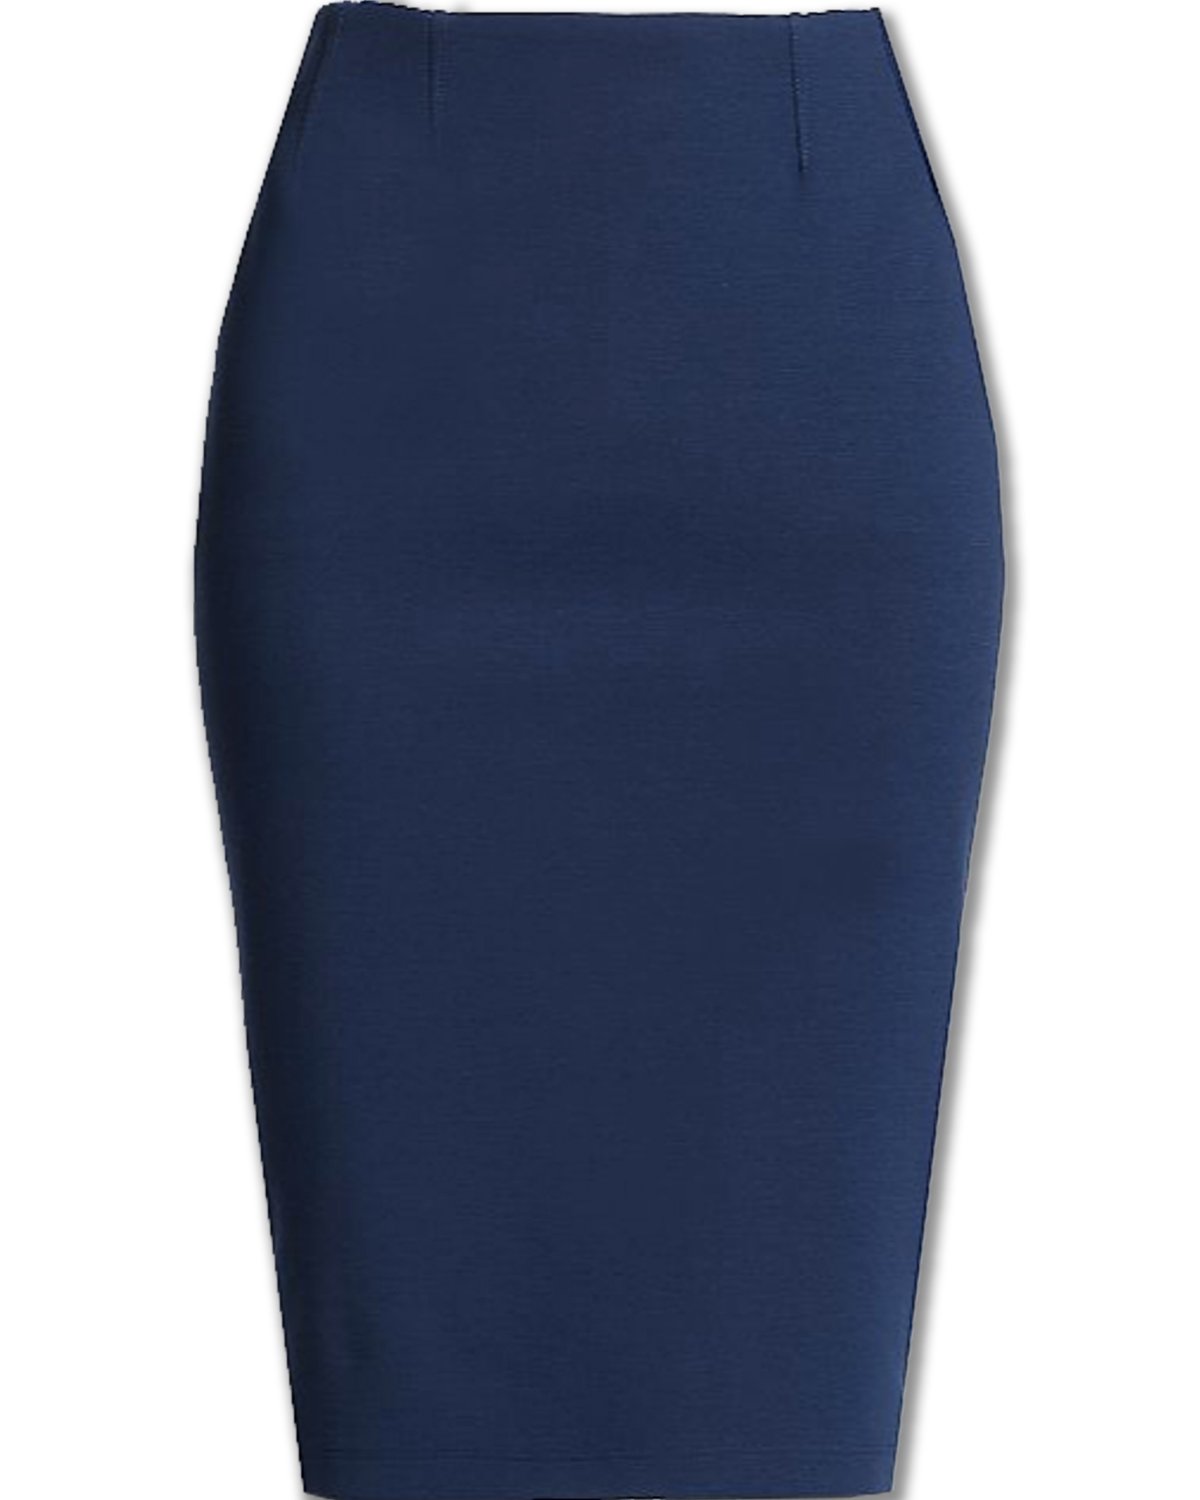 Blue Ponte Knit Pencil Skirt – Elizabeth's Custom Skirts